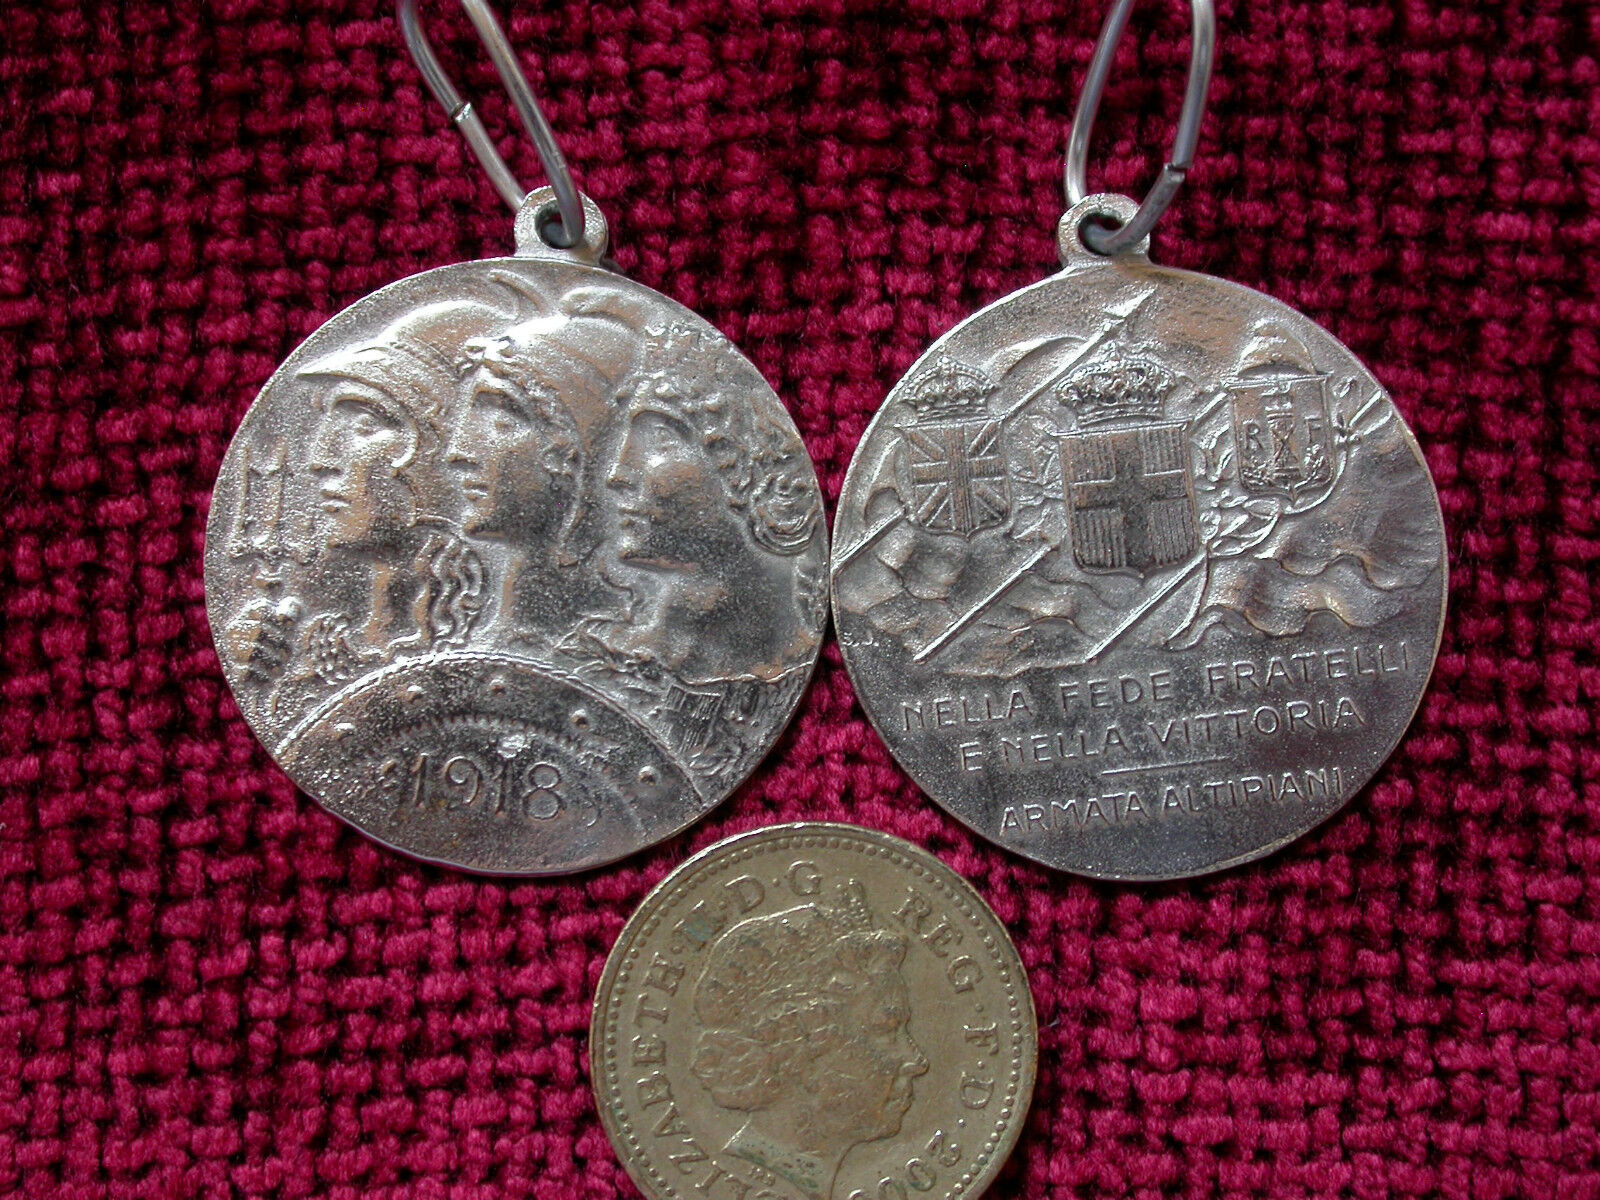 Replica Copy WW1 Armata Altipiani Medal moulded from original